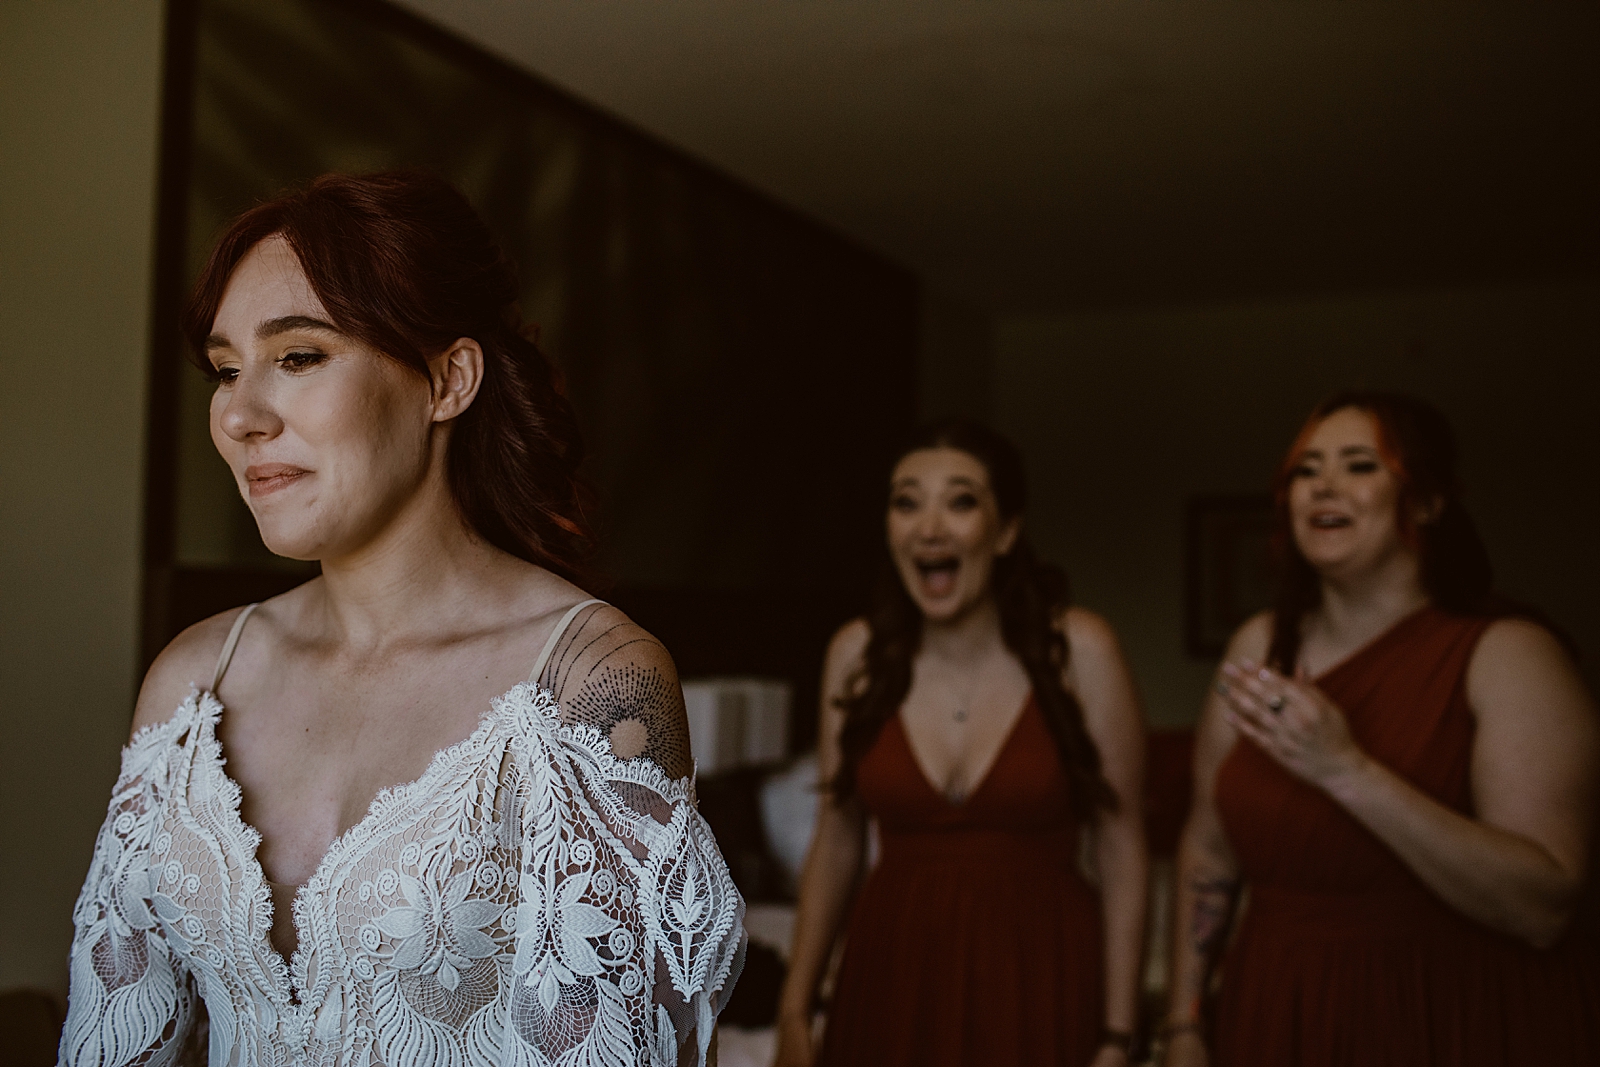 Bridesmaids reaction to seeing Bride in wedding dress